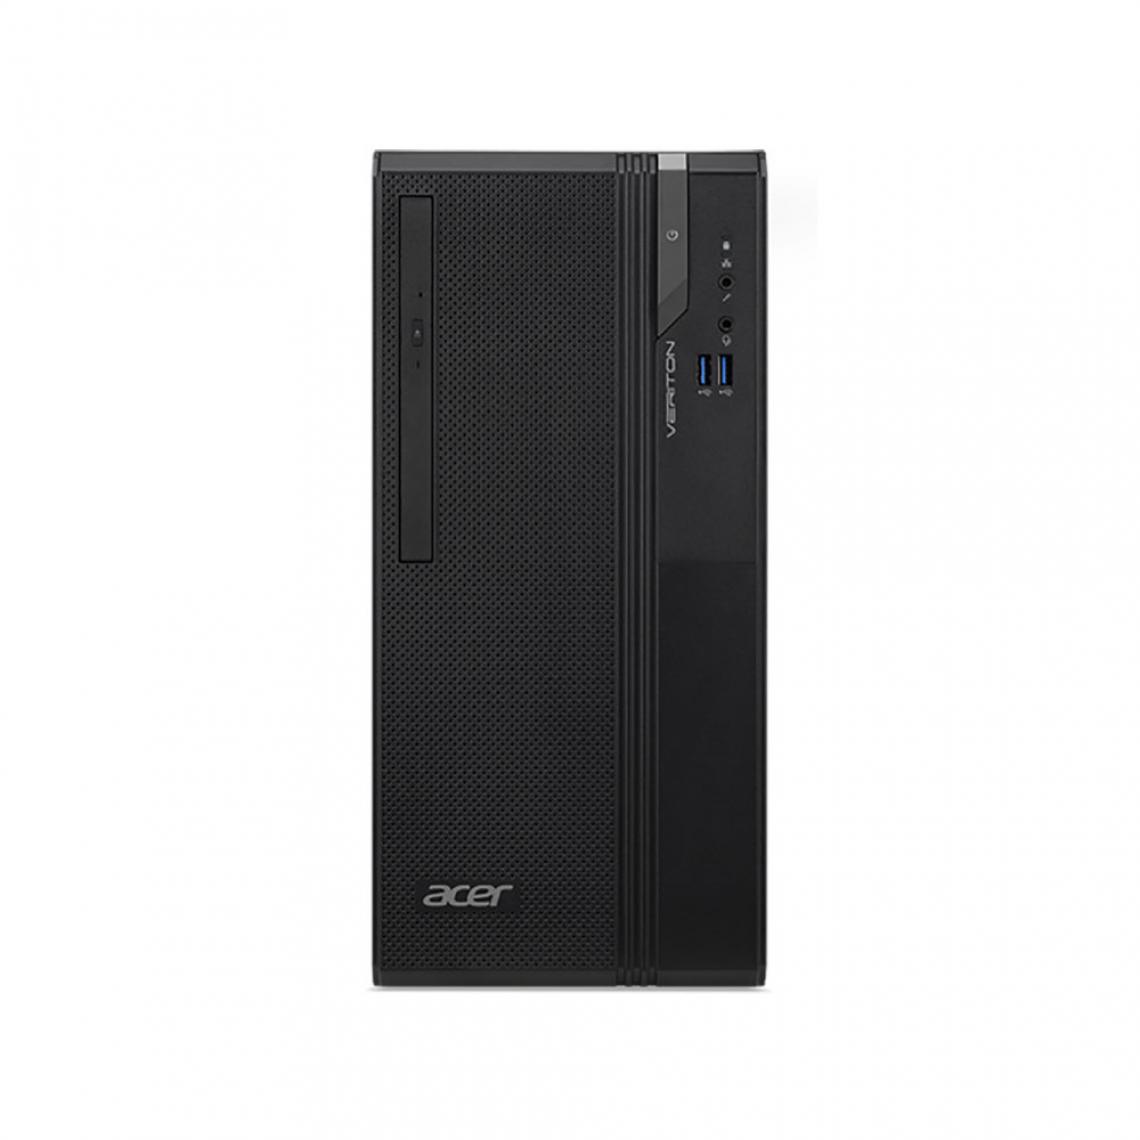 Acer - PC ACER VERITON VES2740G Desktop15L Core i3-10100 8 Go 256 Go Intel HDGraphics 630 Win 10 Pro - PC Fixe